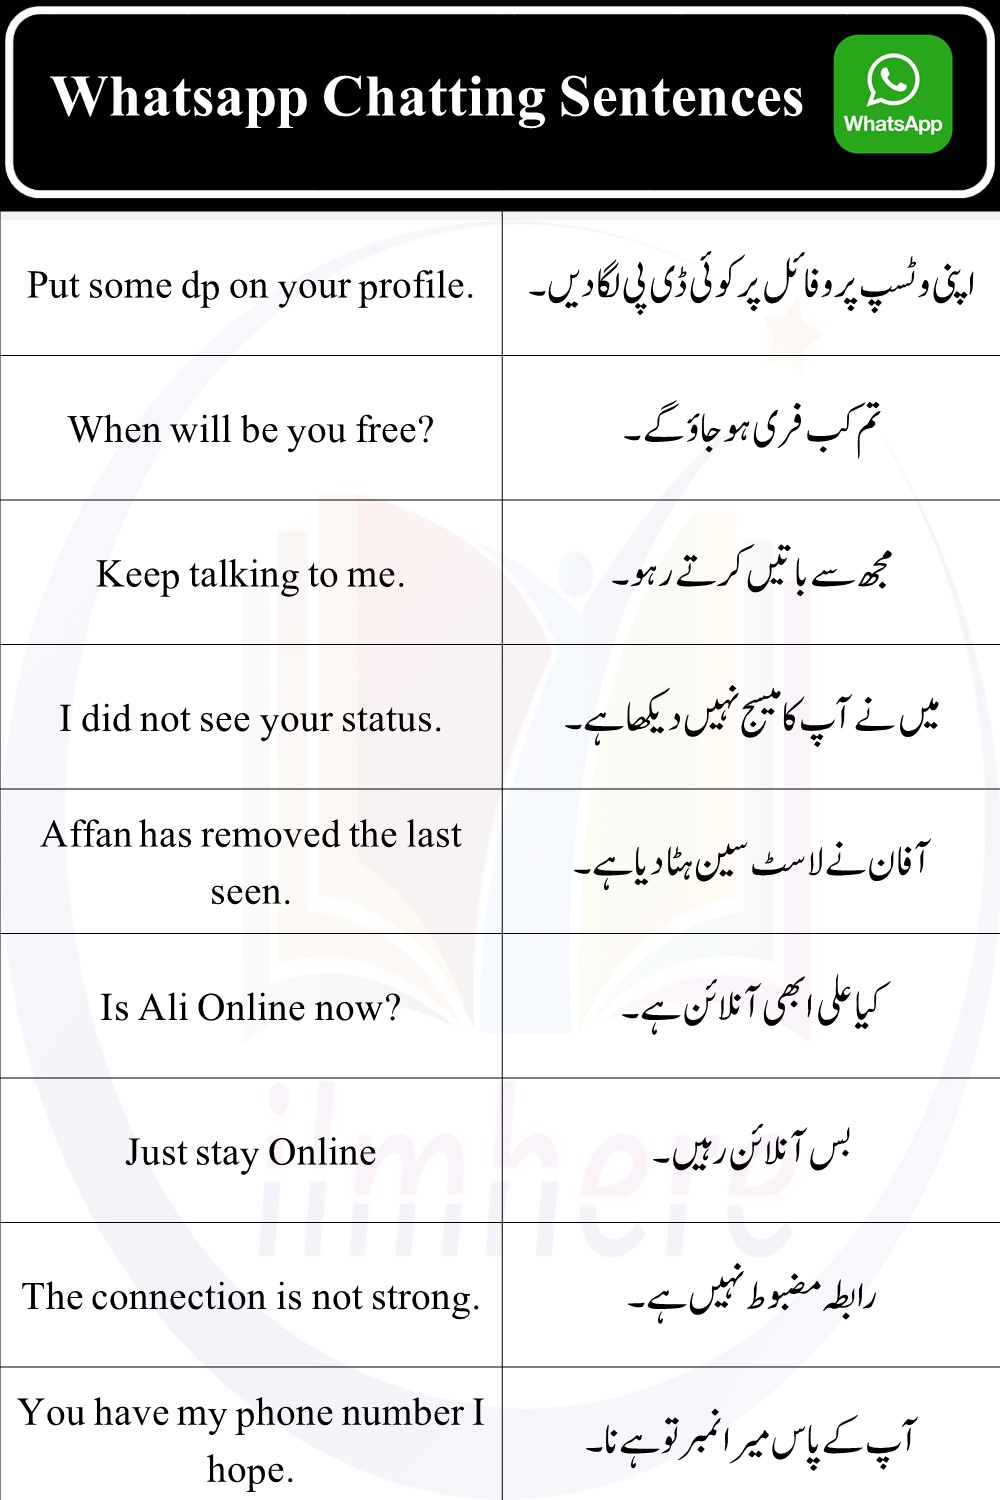 47 WhatsApp Chatting Sentences In English With Urdu Translation